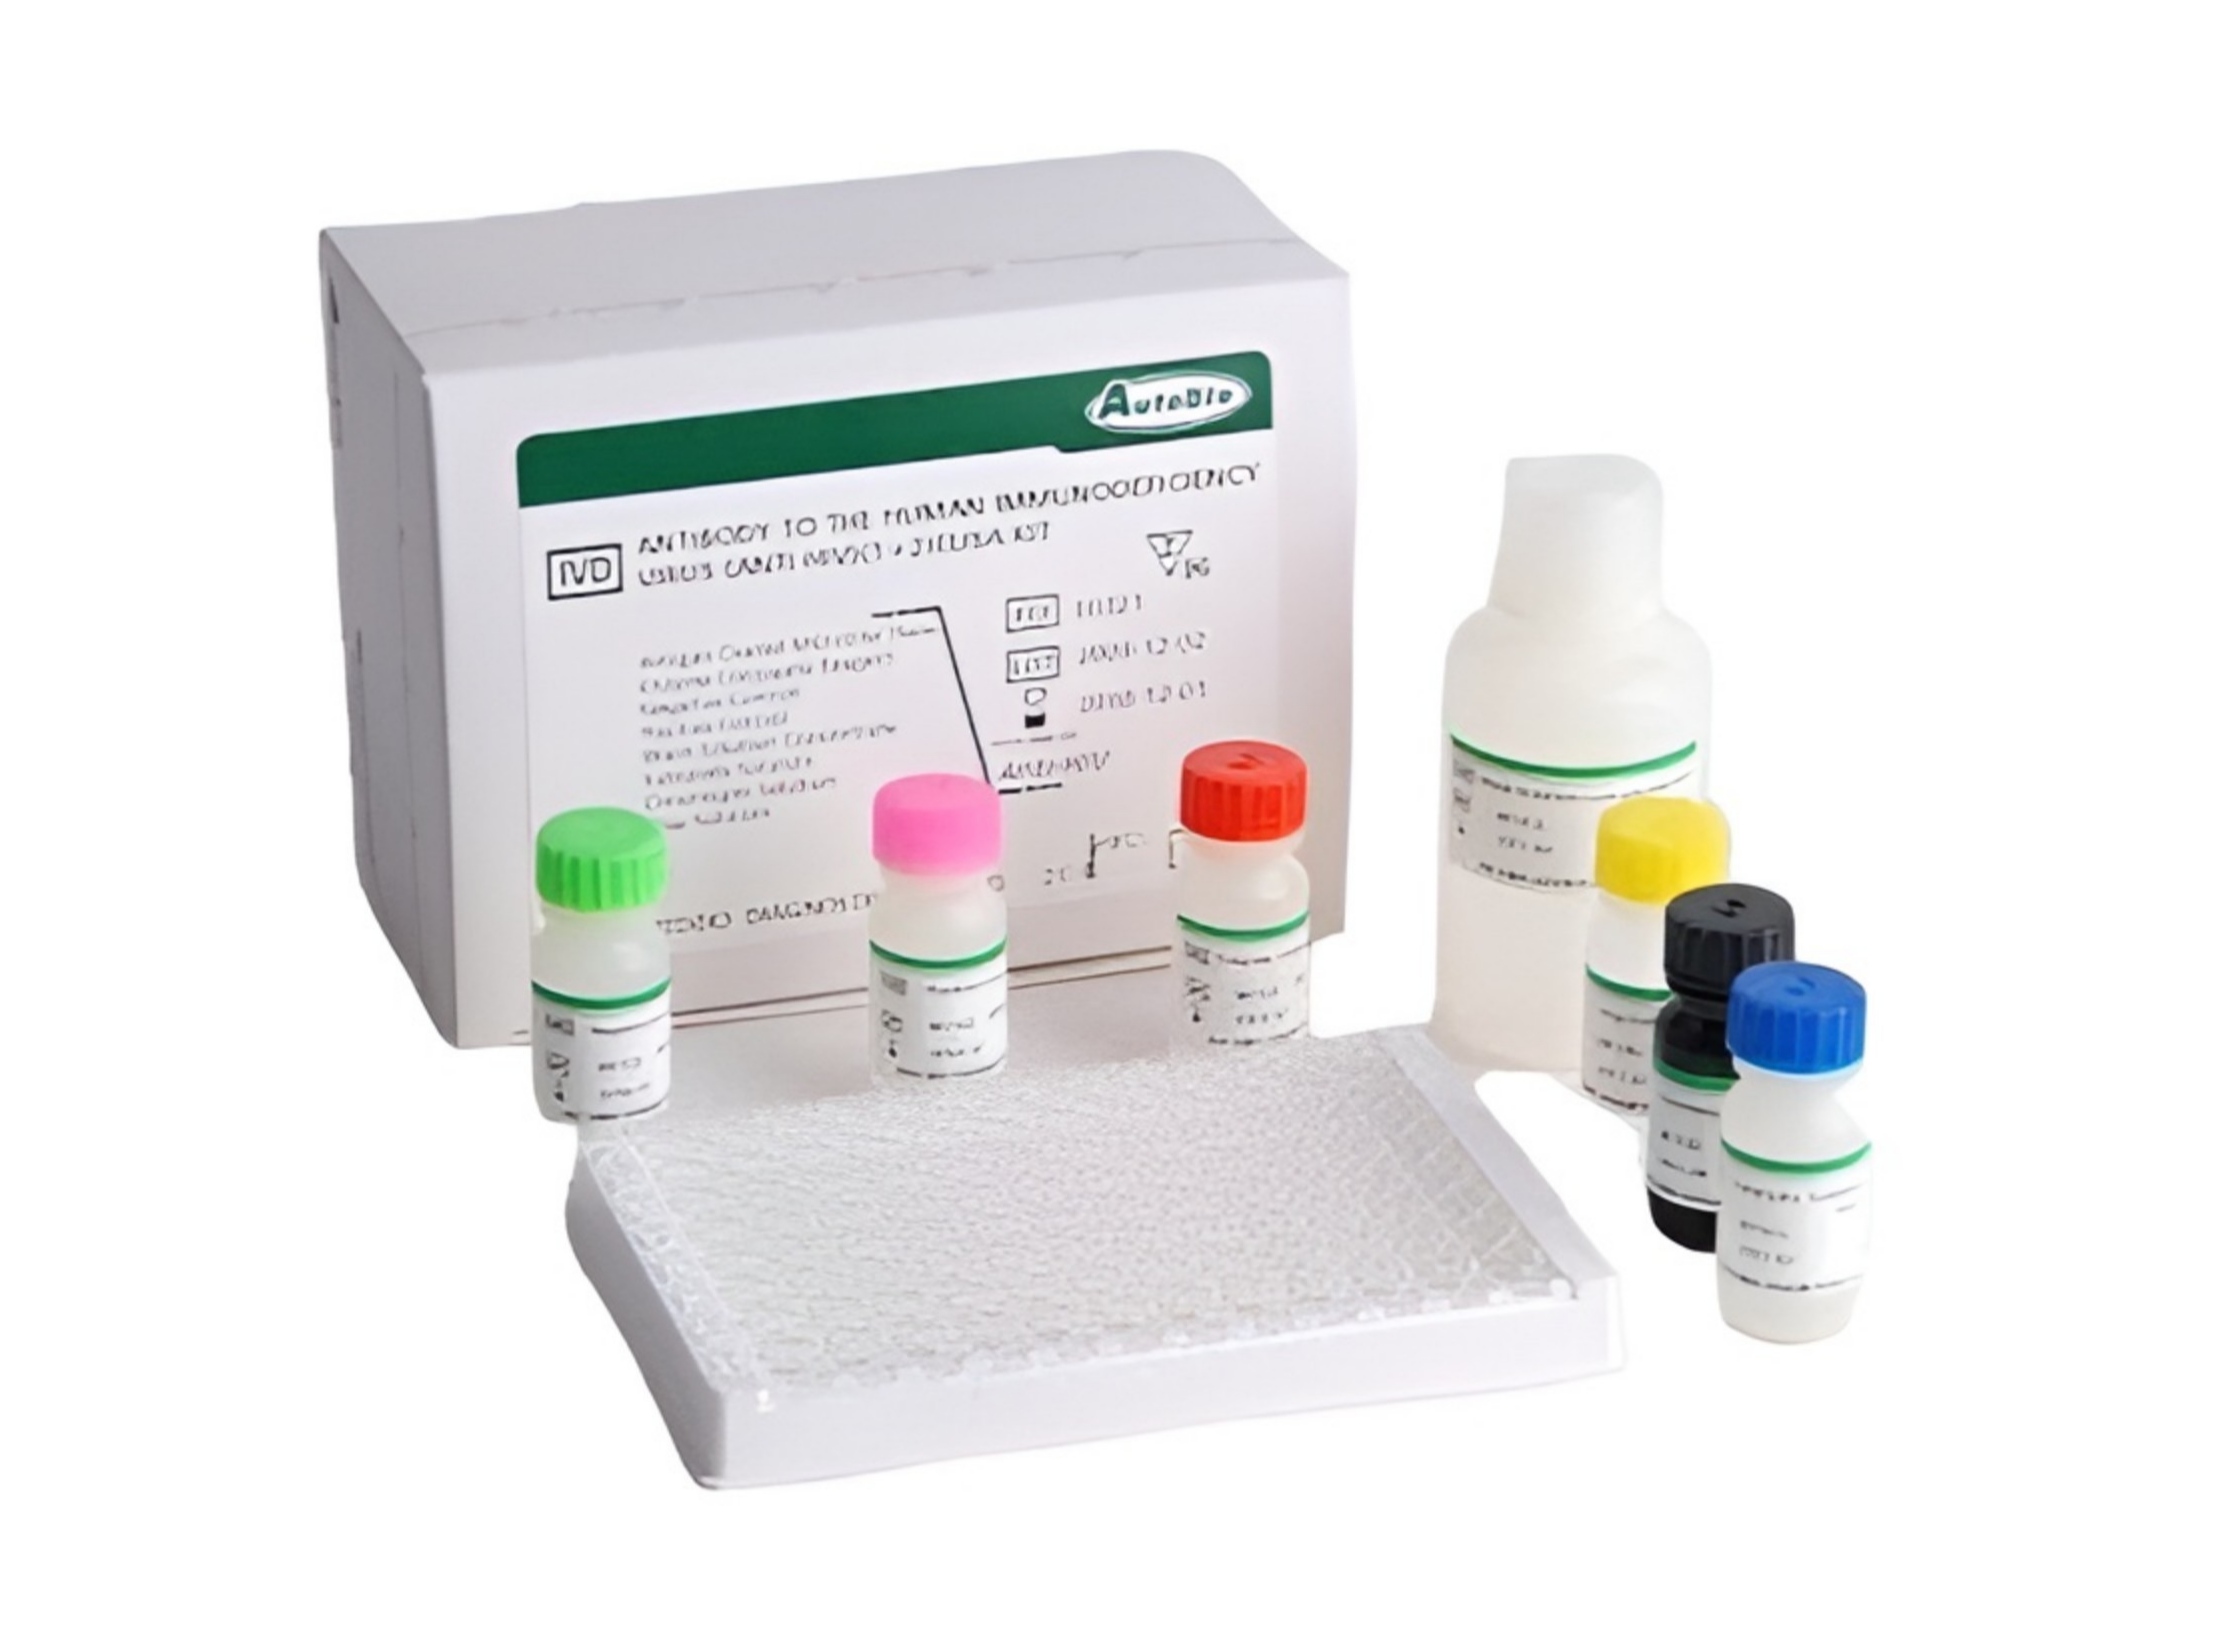 Toxo IgG (Toxoplasma Gondii IgG) Hormone Test Kit